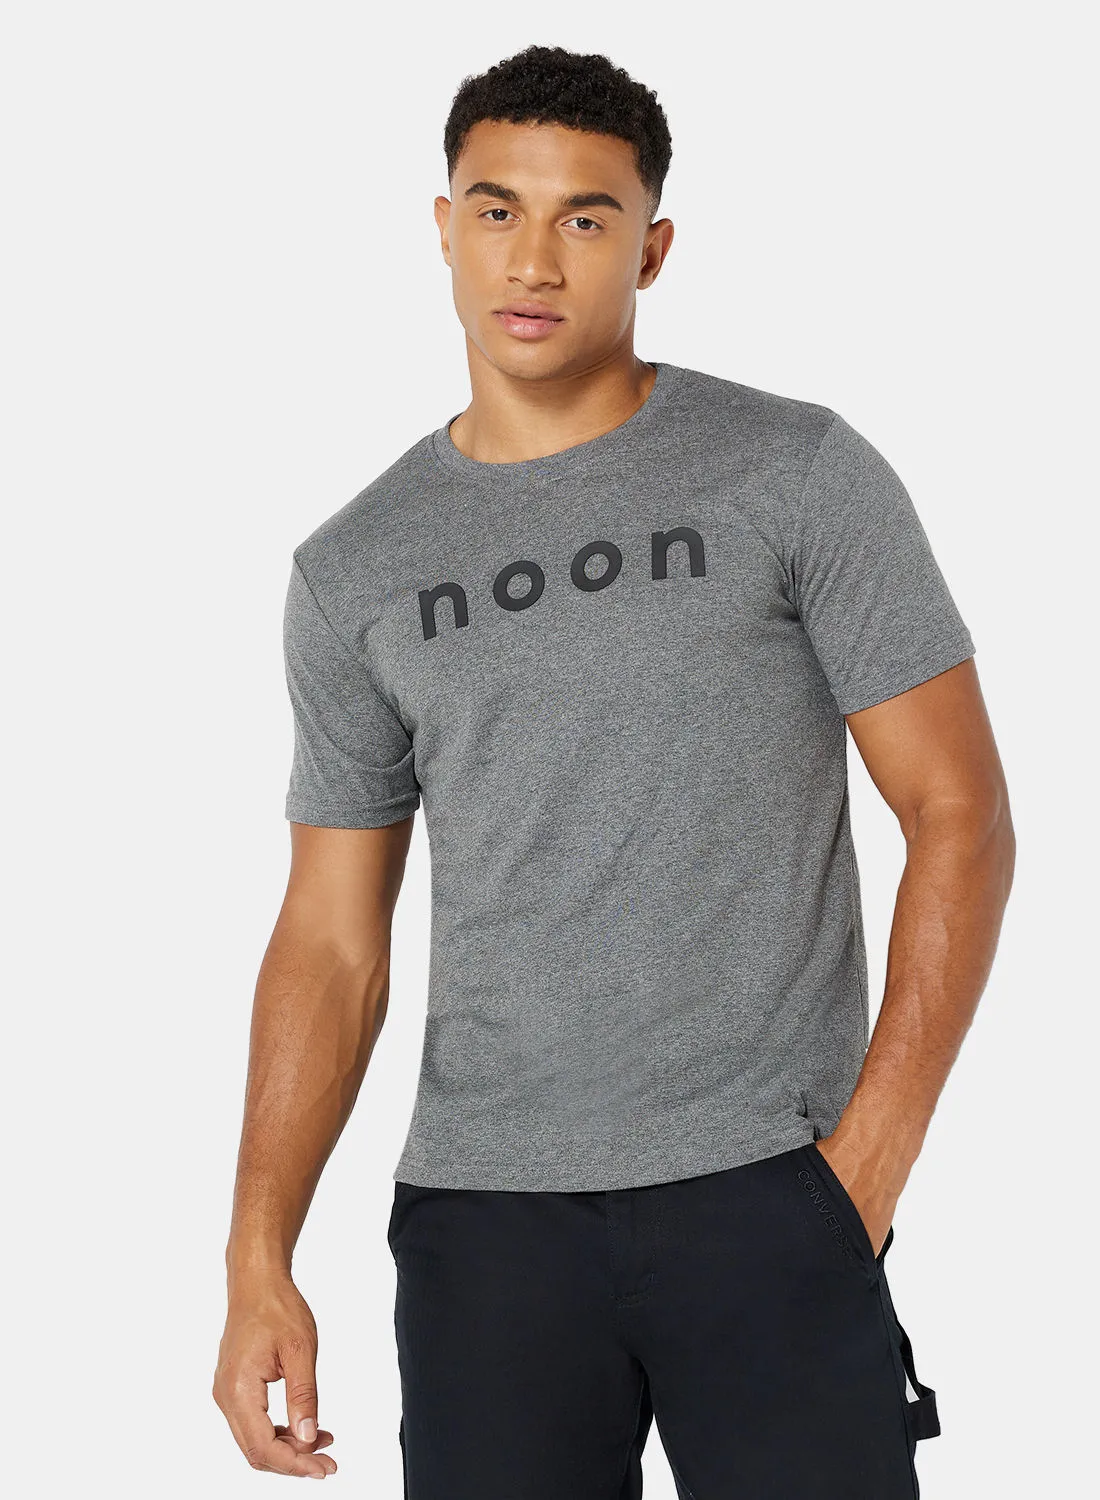 noon Merchandise T-Shirt For Men Dark Grey Melange